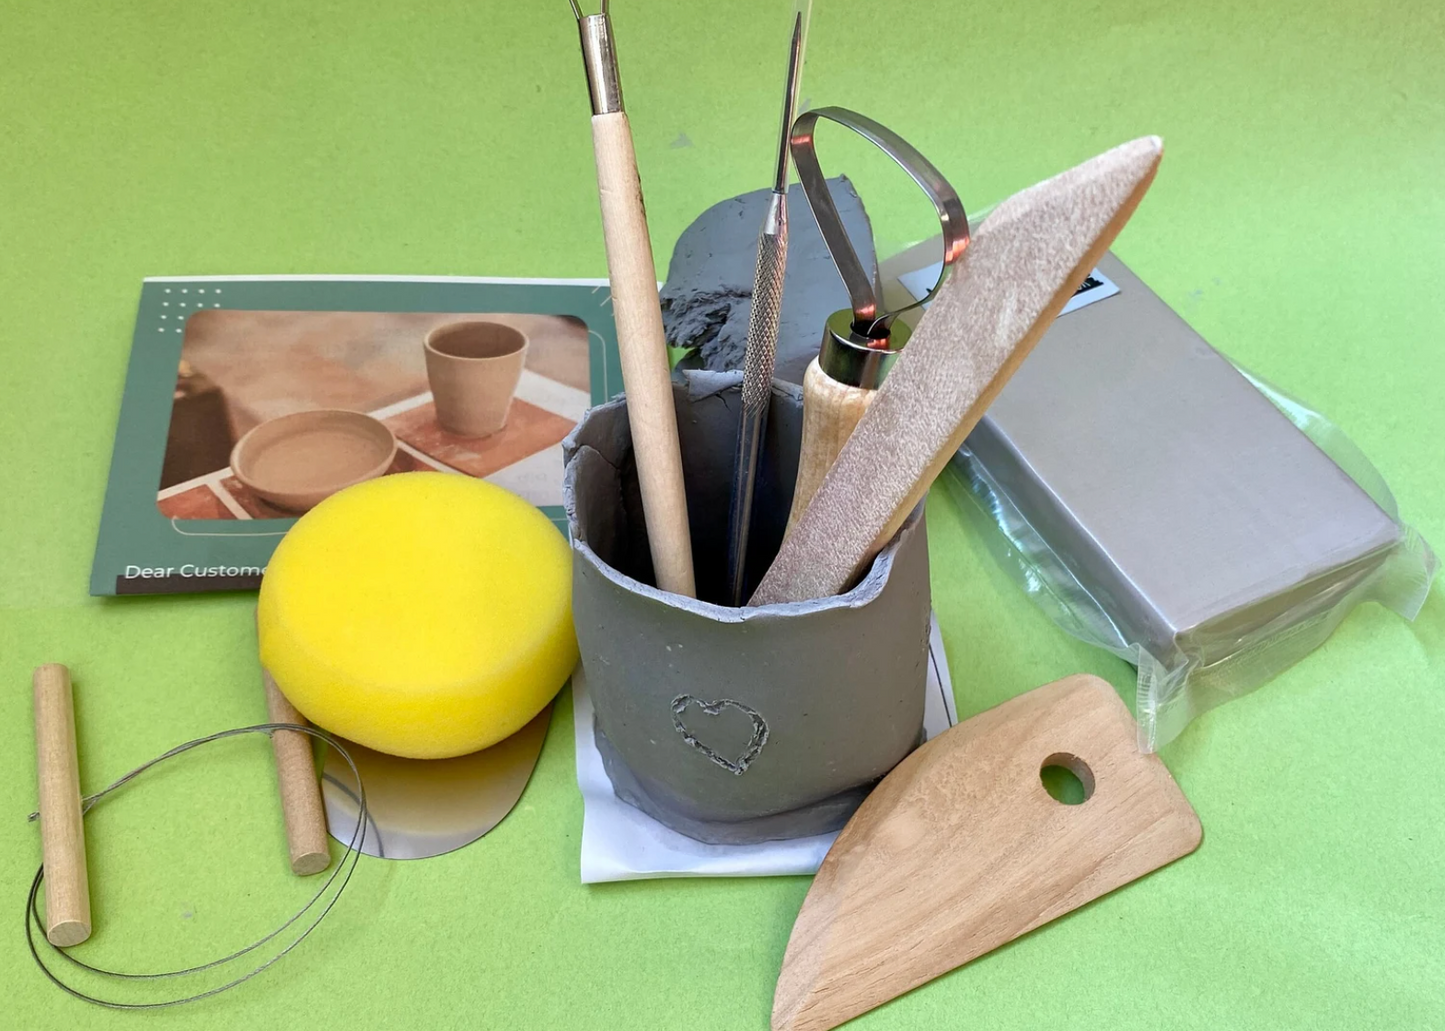 Pottery Kit - Air dry clay - Diy Craft Kit - Kits & how to - Pottery kit - Home Craft Kit - Adult Craft - Air Dry Clay Kit - Do it yourself